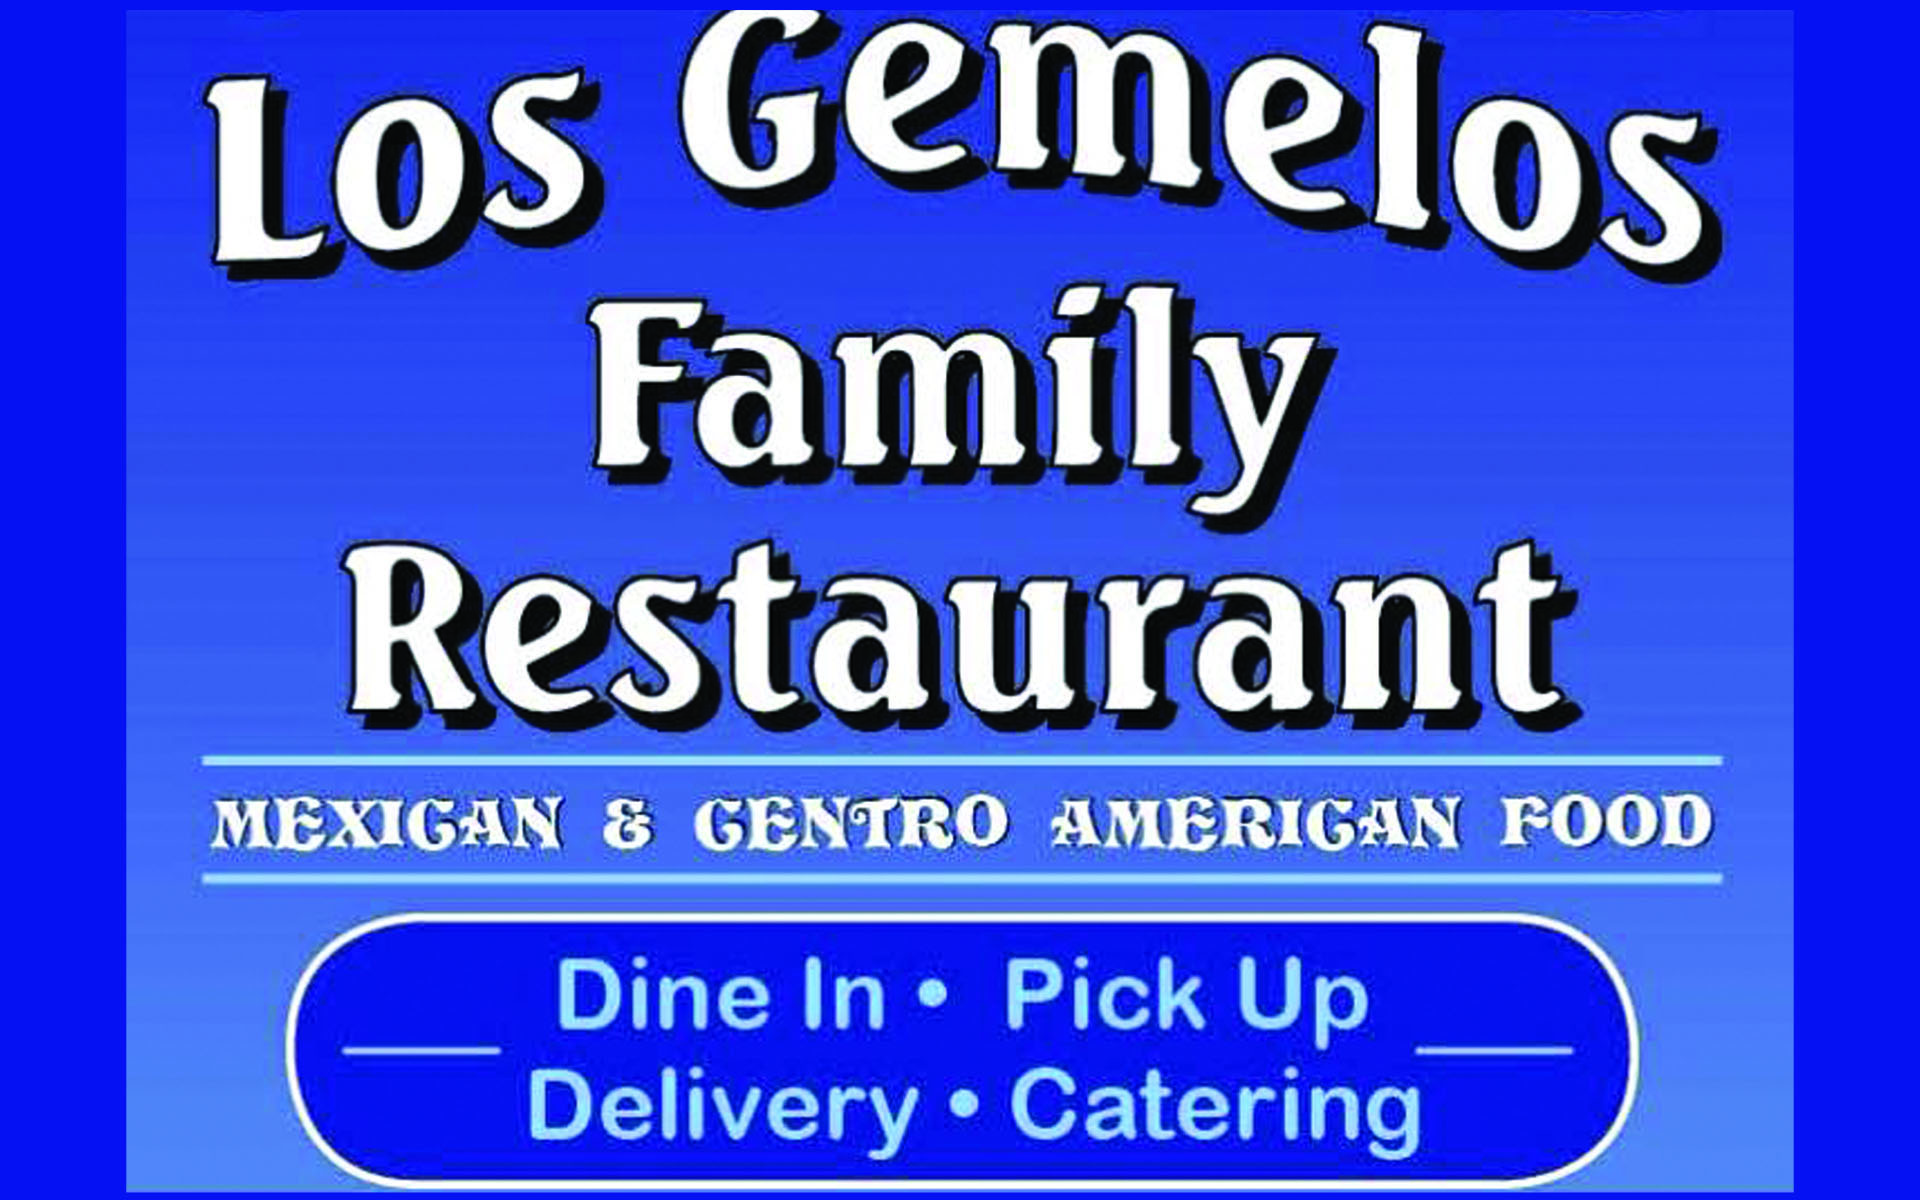 Los Gemelos Family Restaurant Logo